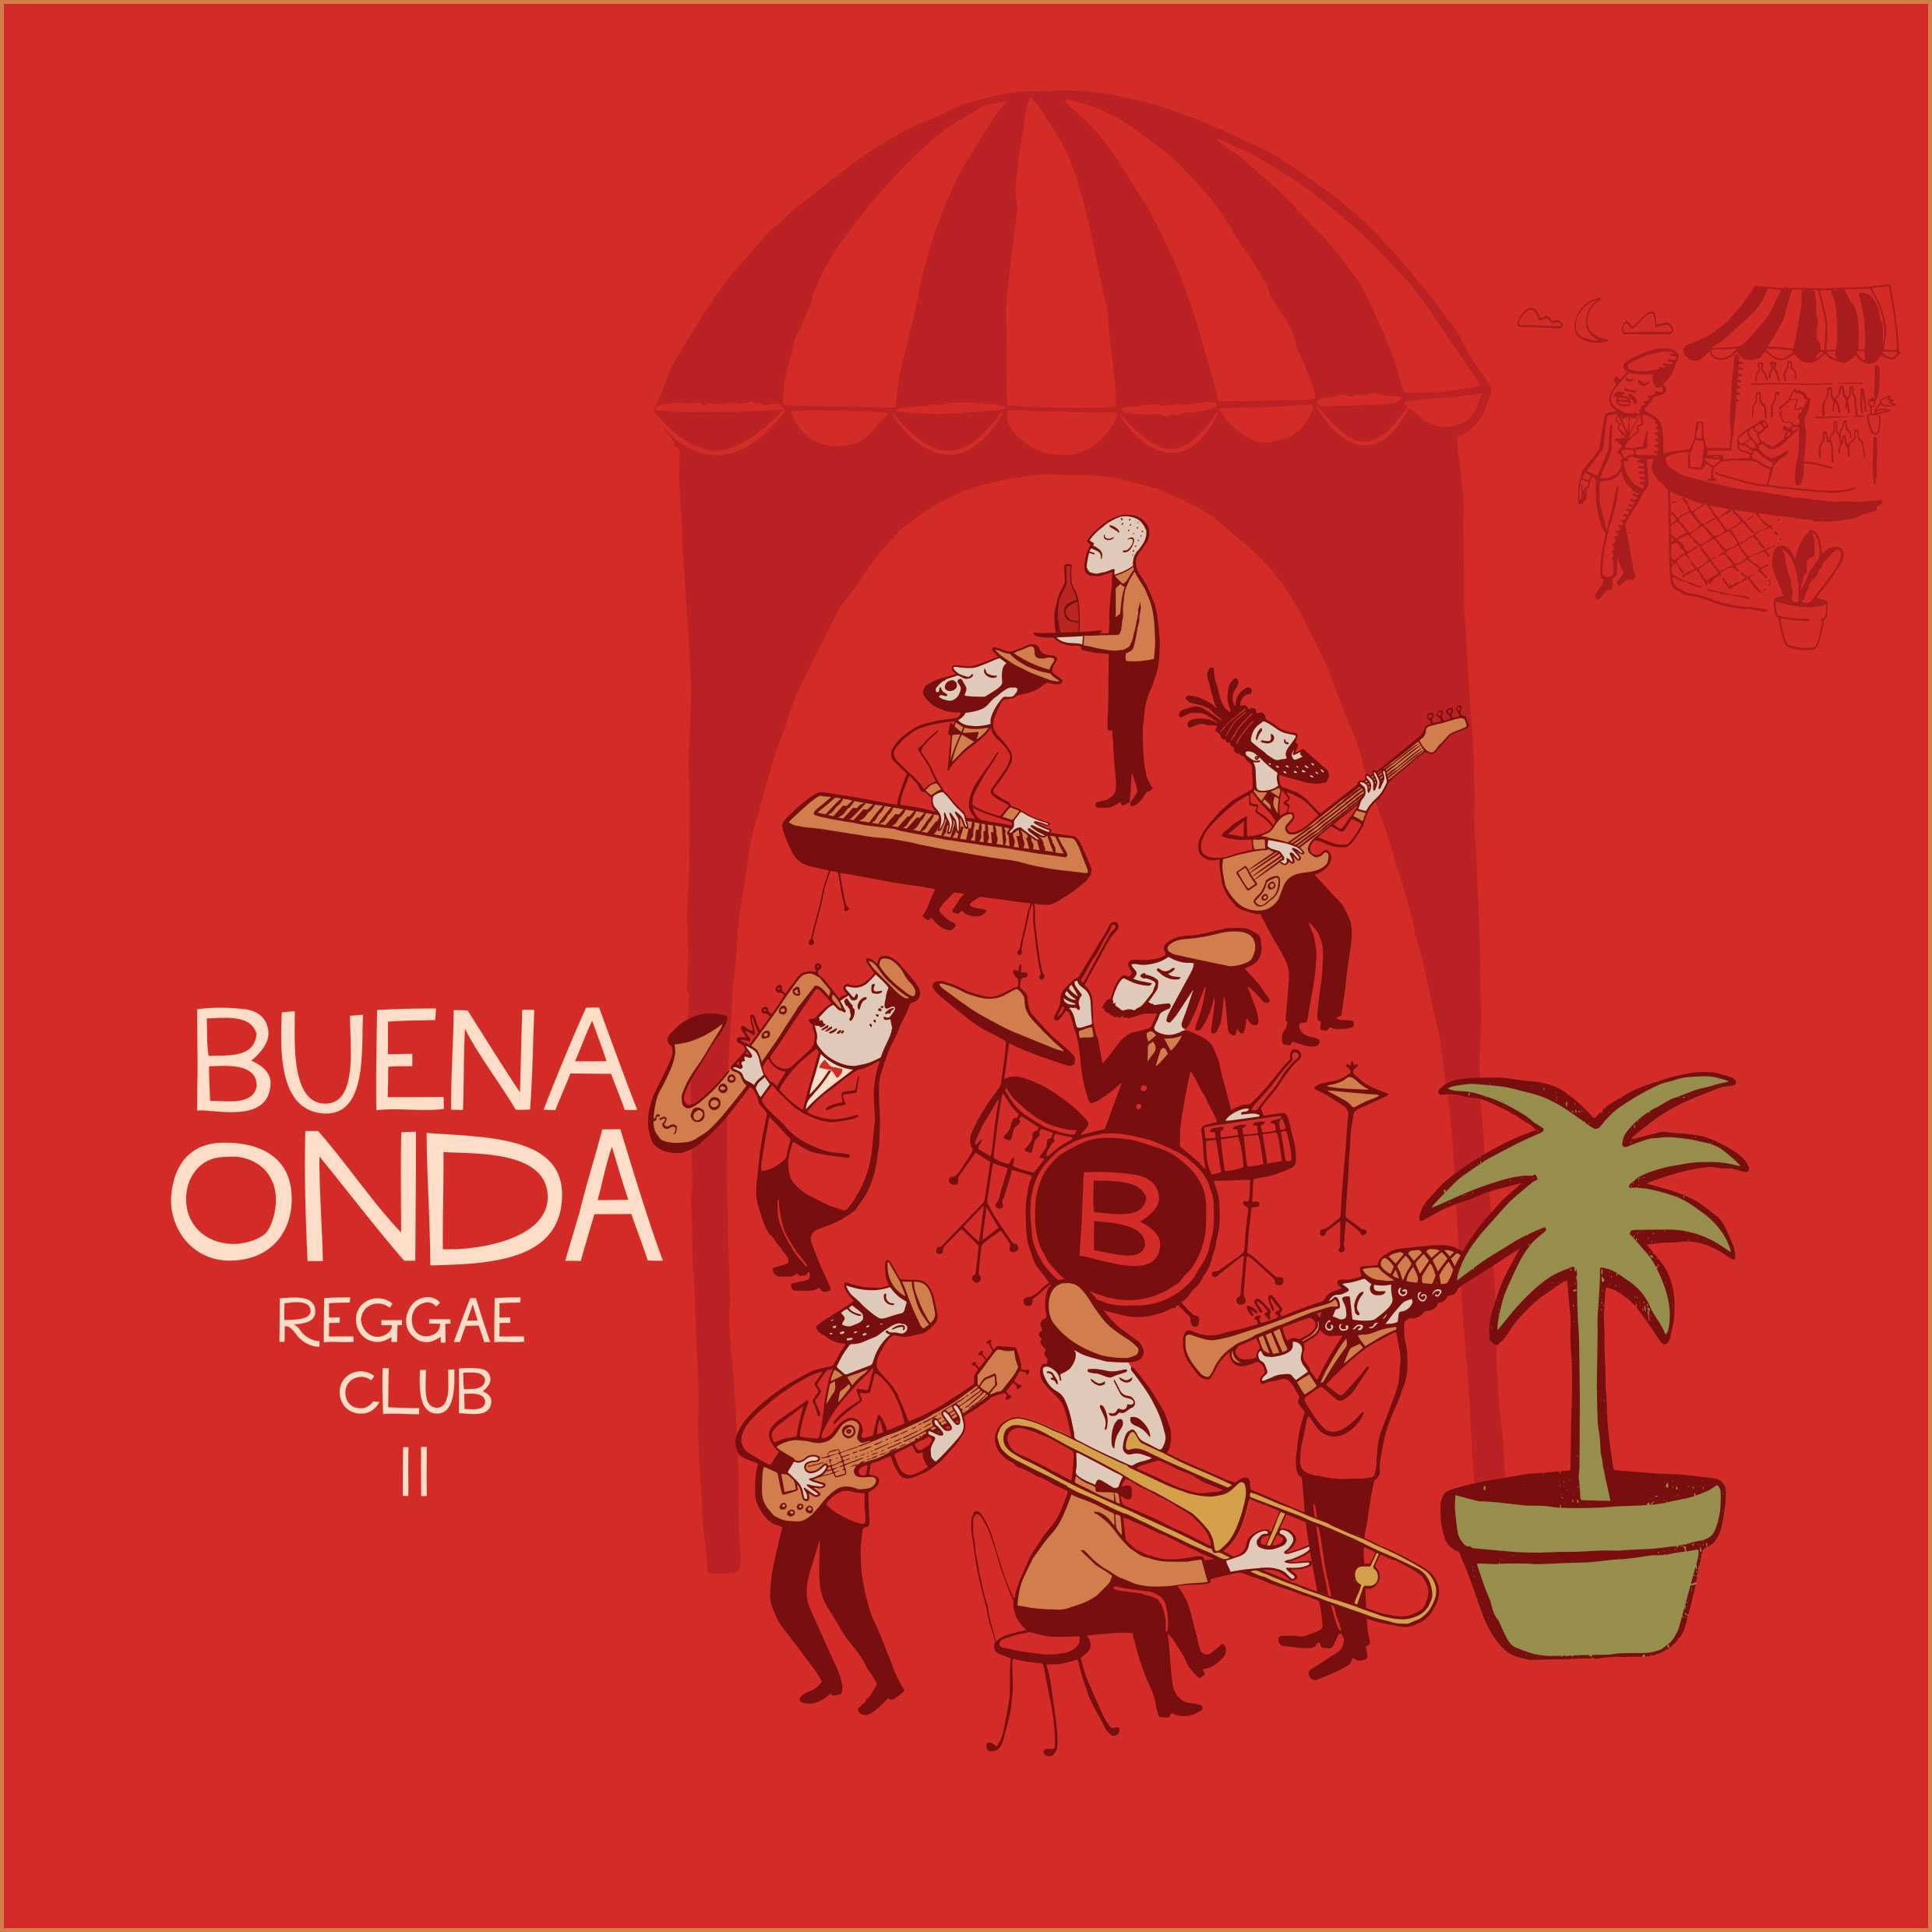 Capa do disco "Buena Onda Reggae Club II"